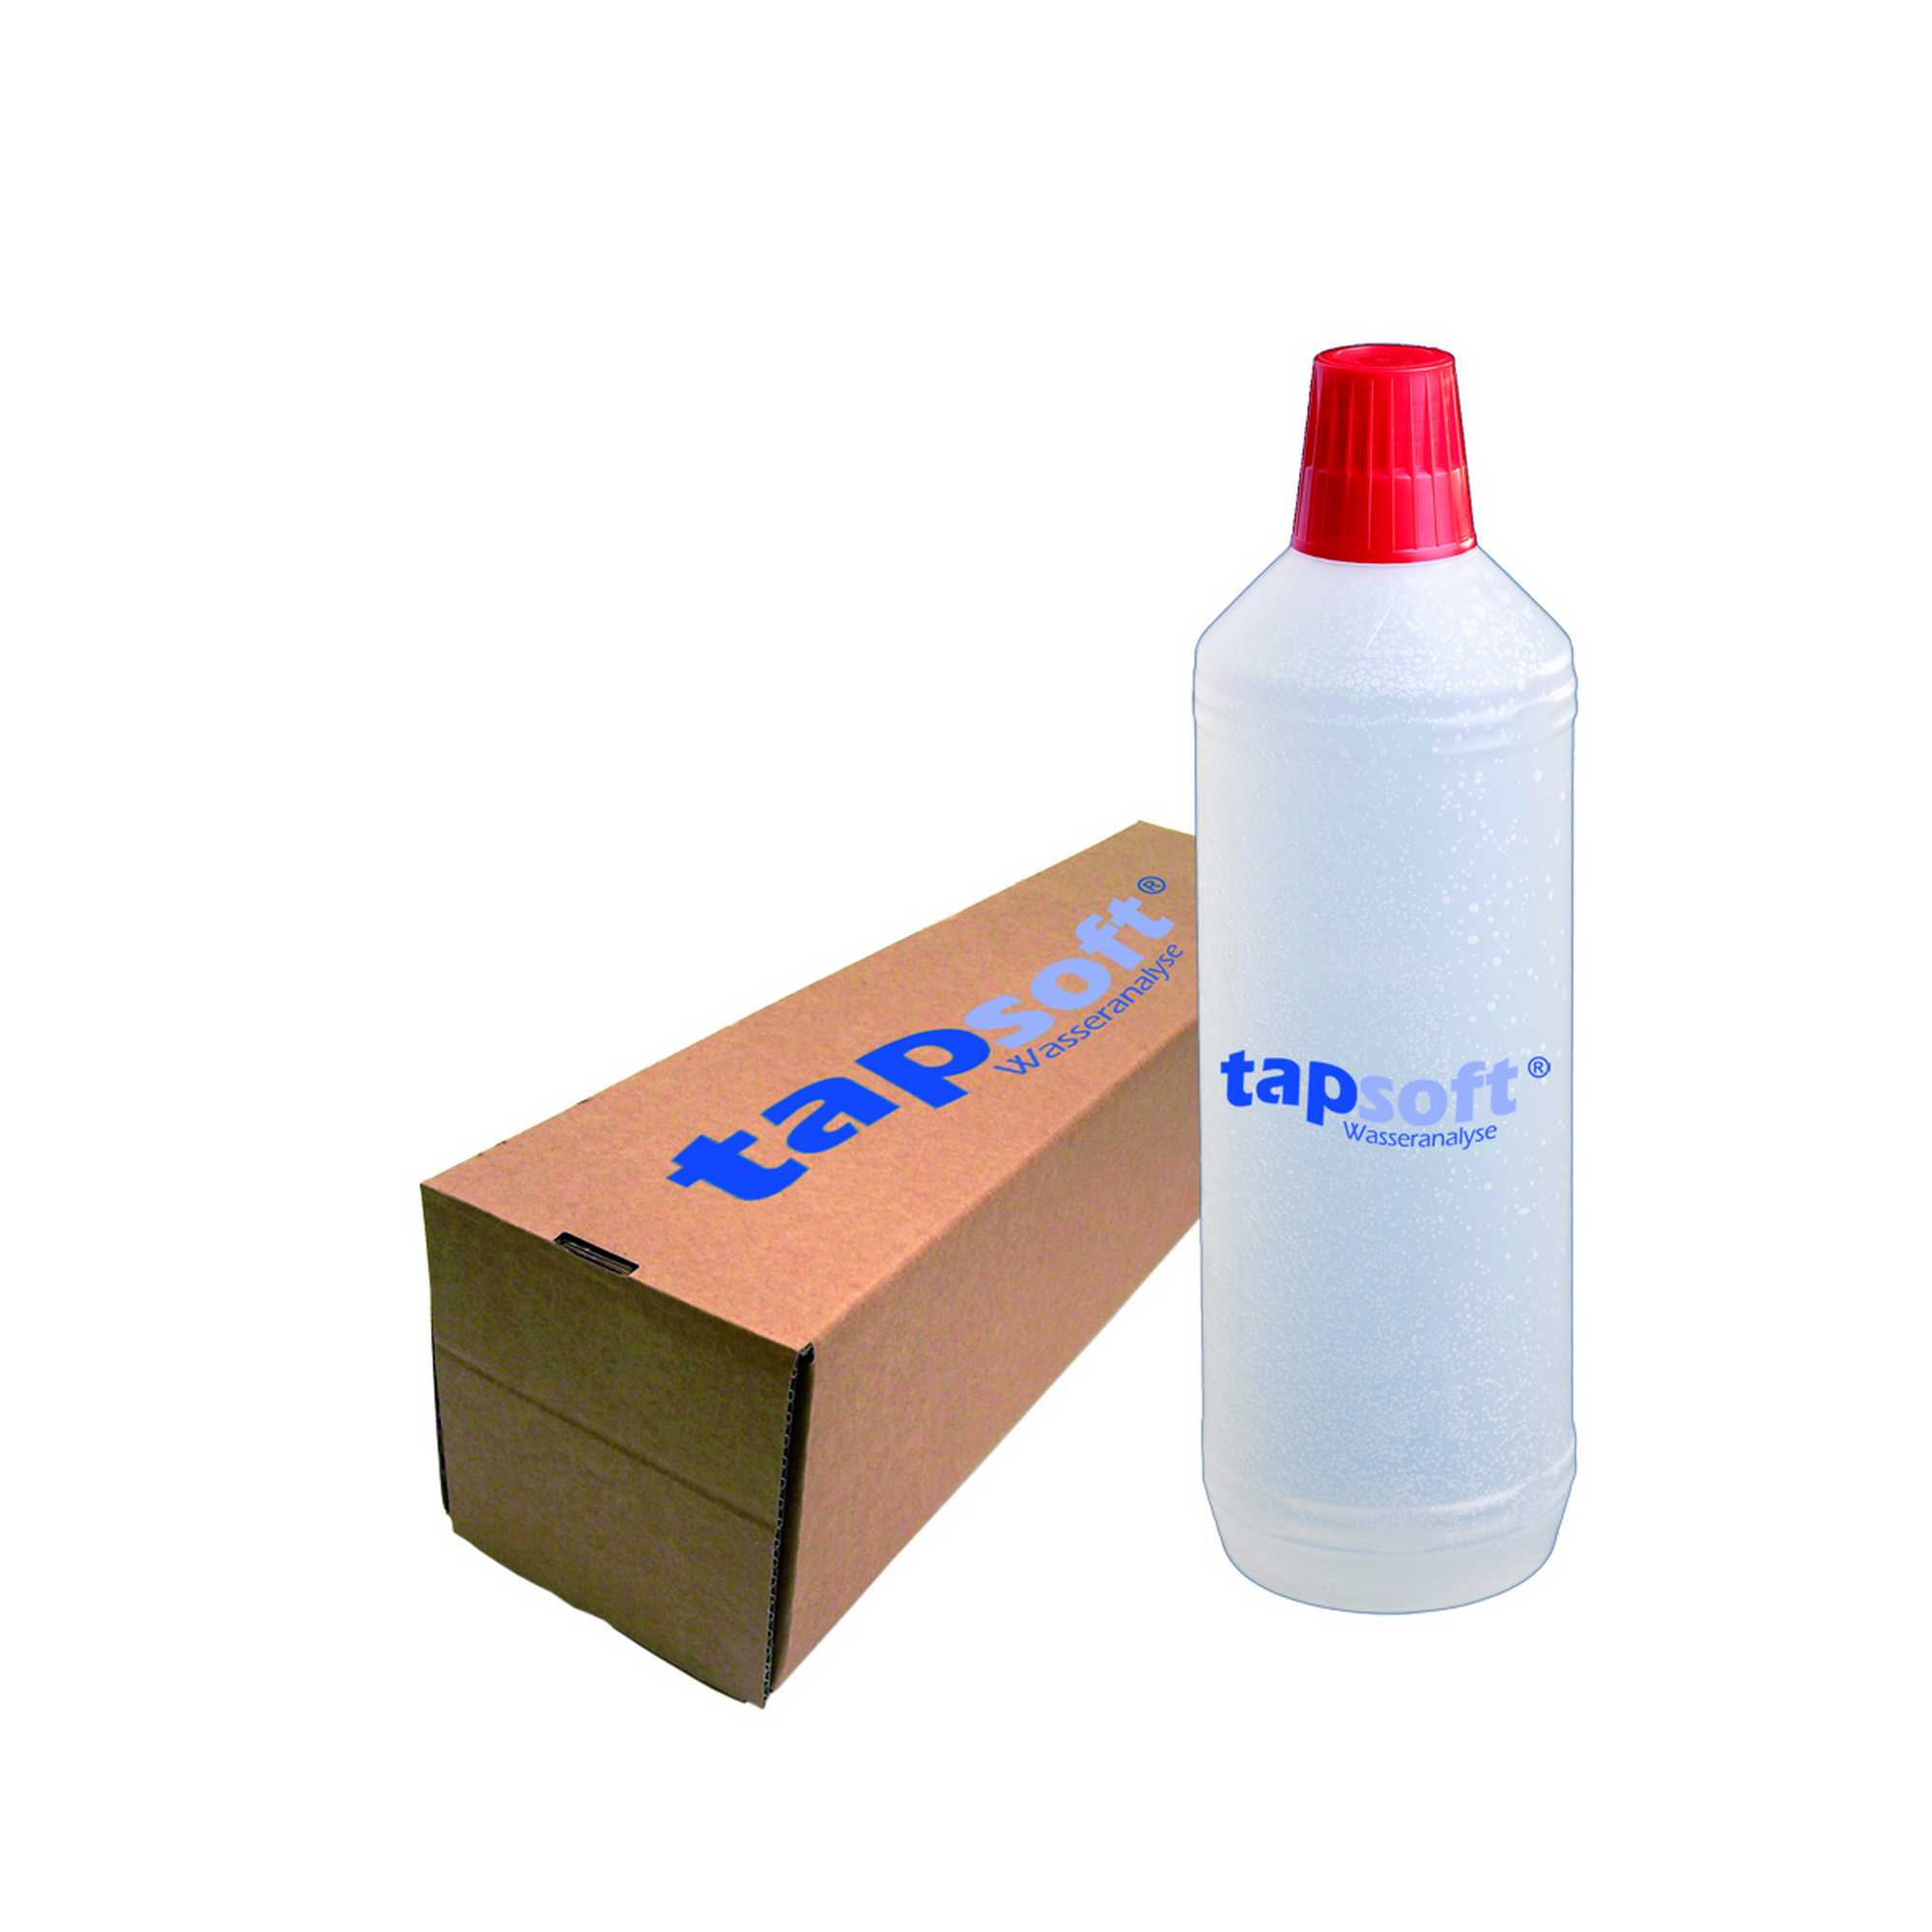 Tapsoft Wasseranalyse + product picture